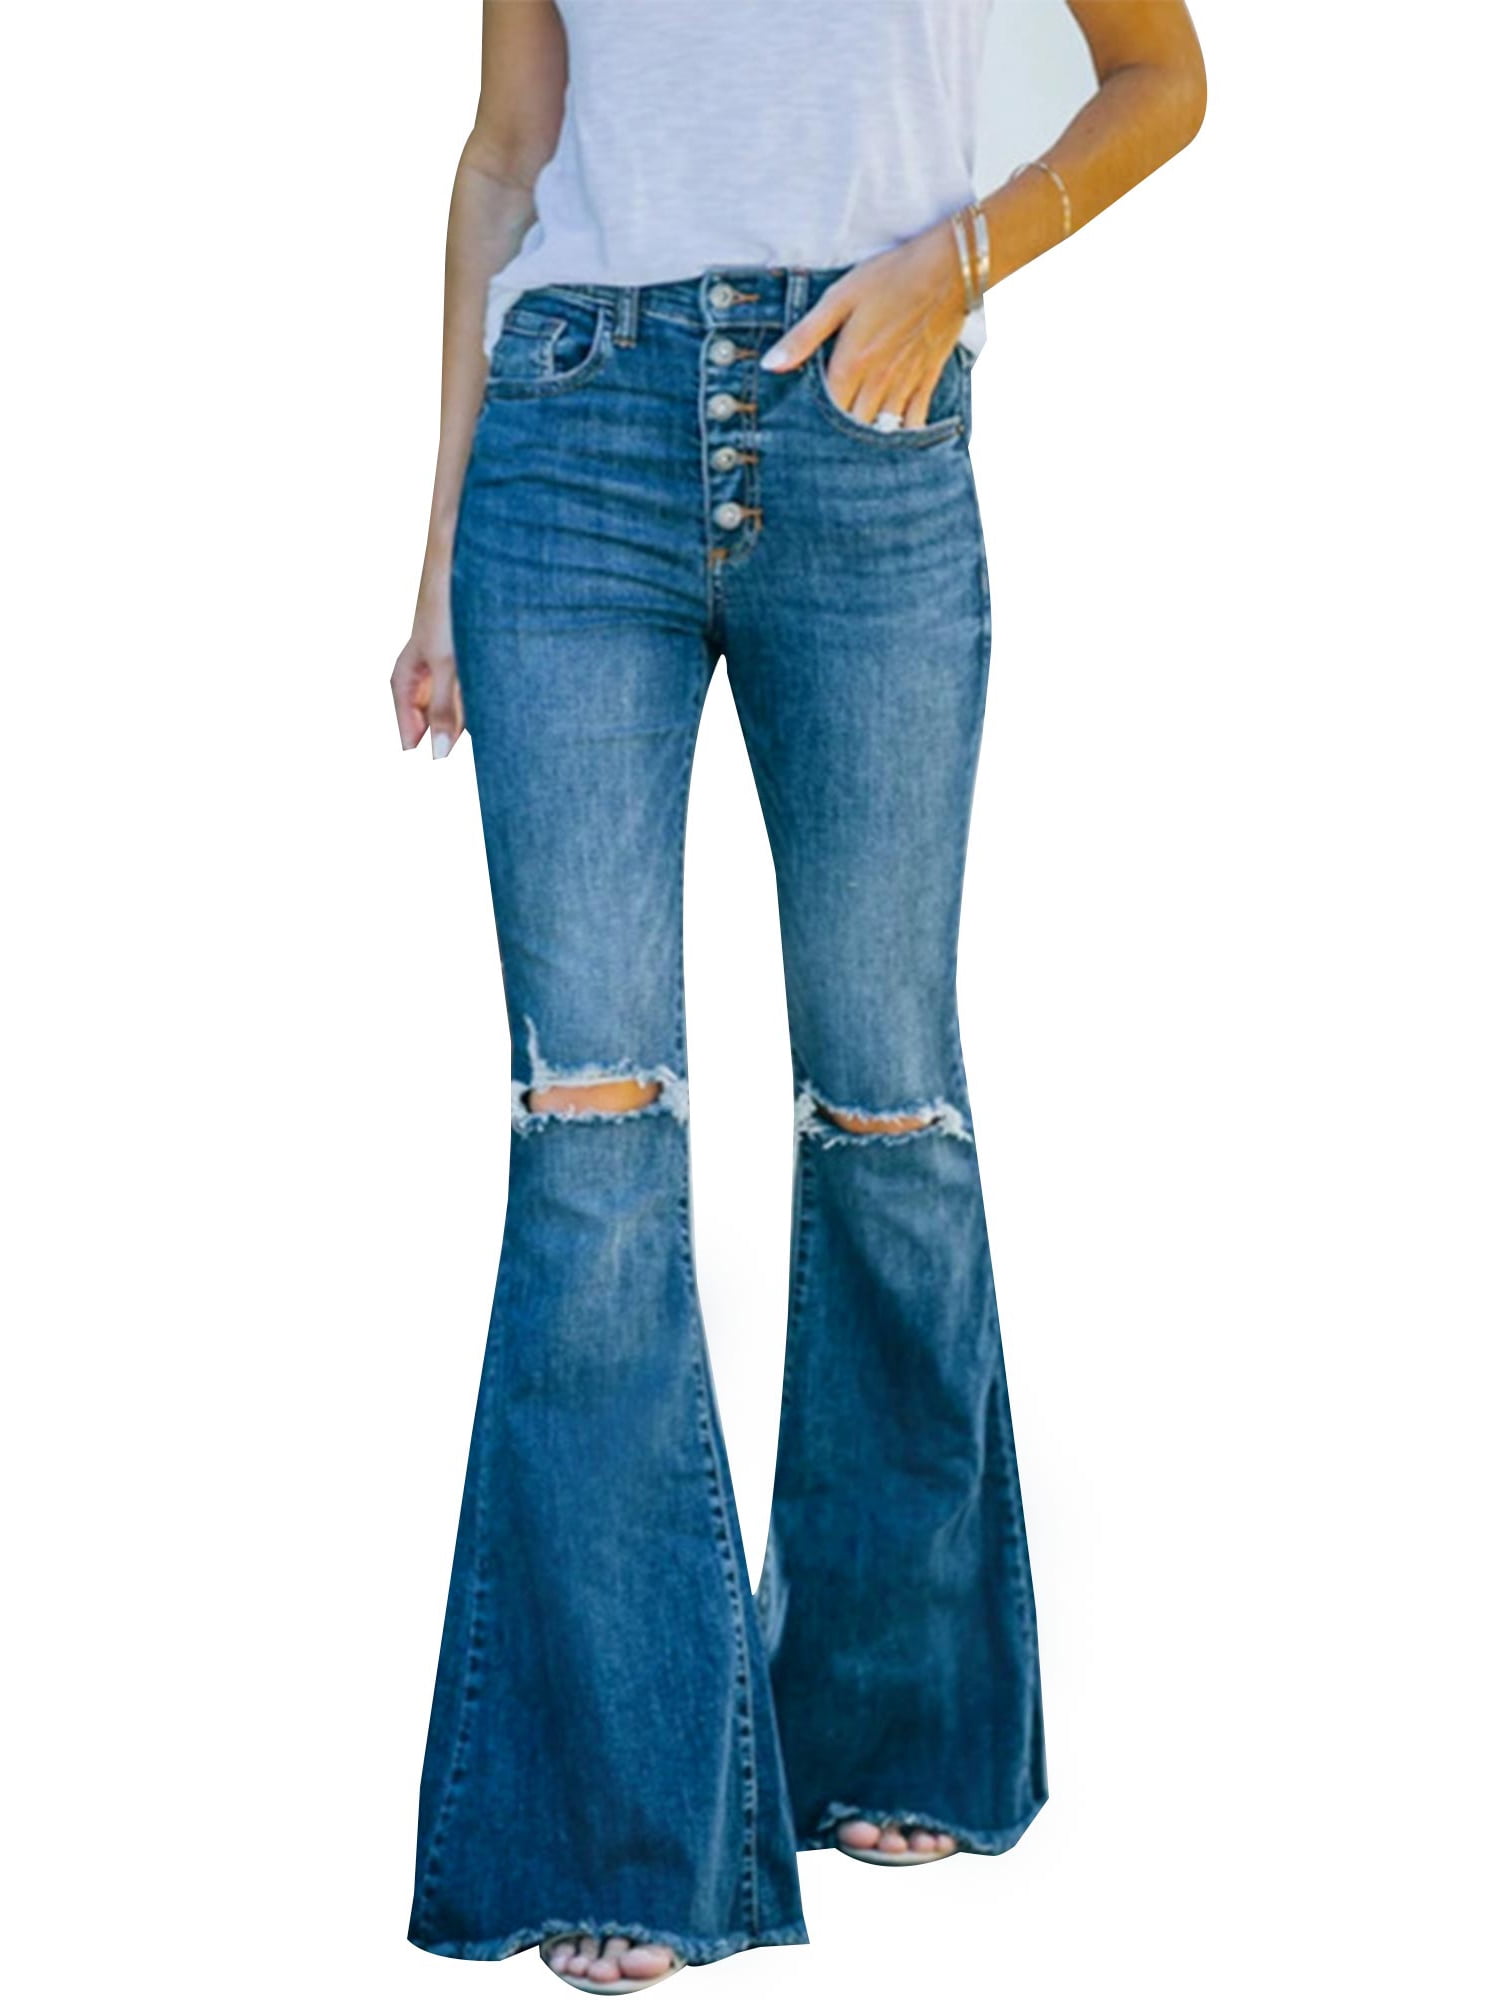 Damen Bootcut Jeans Hose Schlaghose Denim blue bleached Stretch S M L XL 